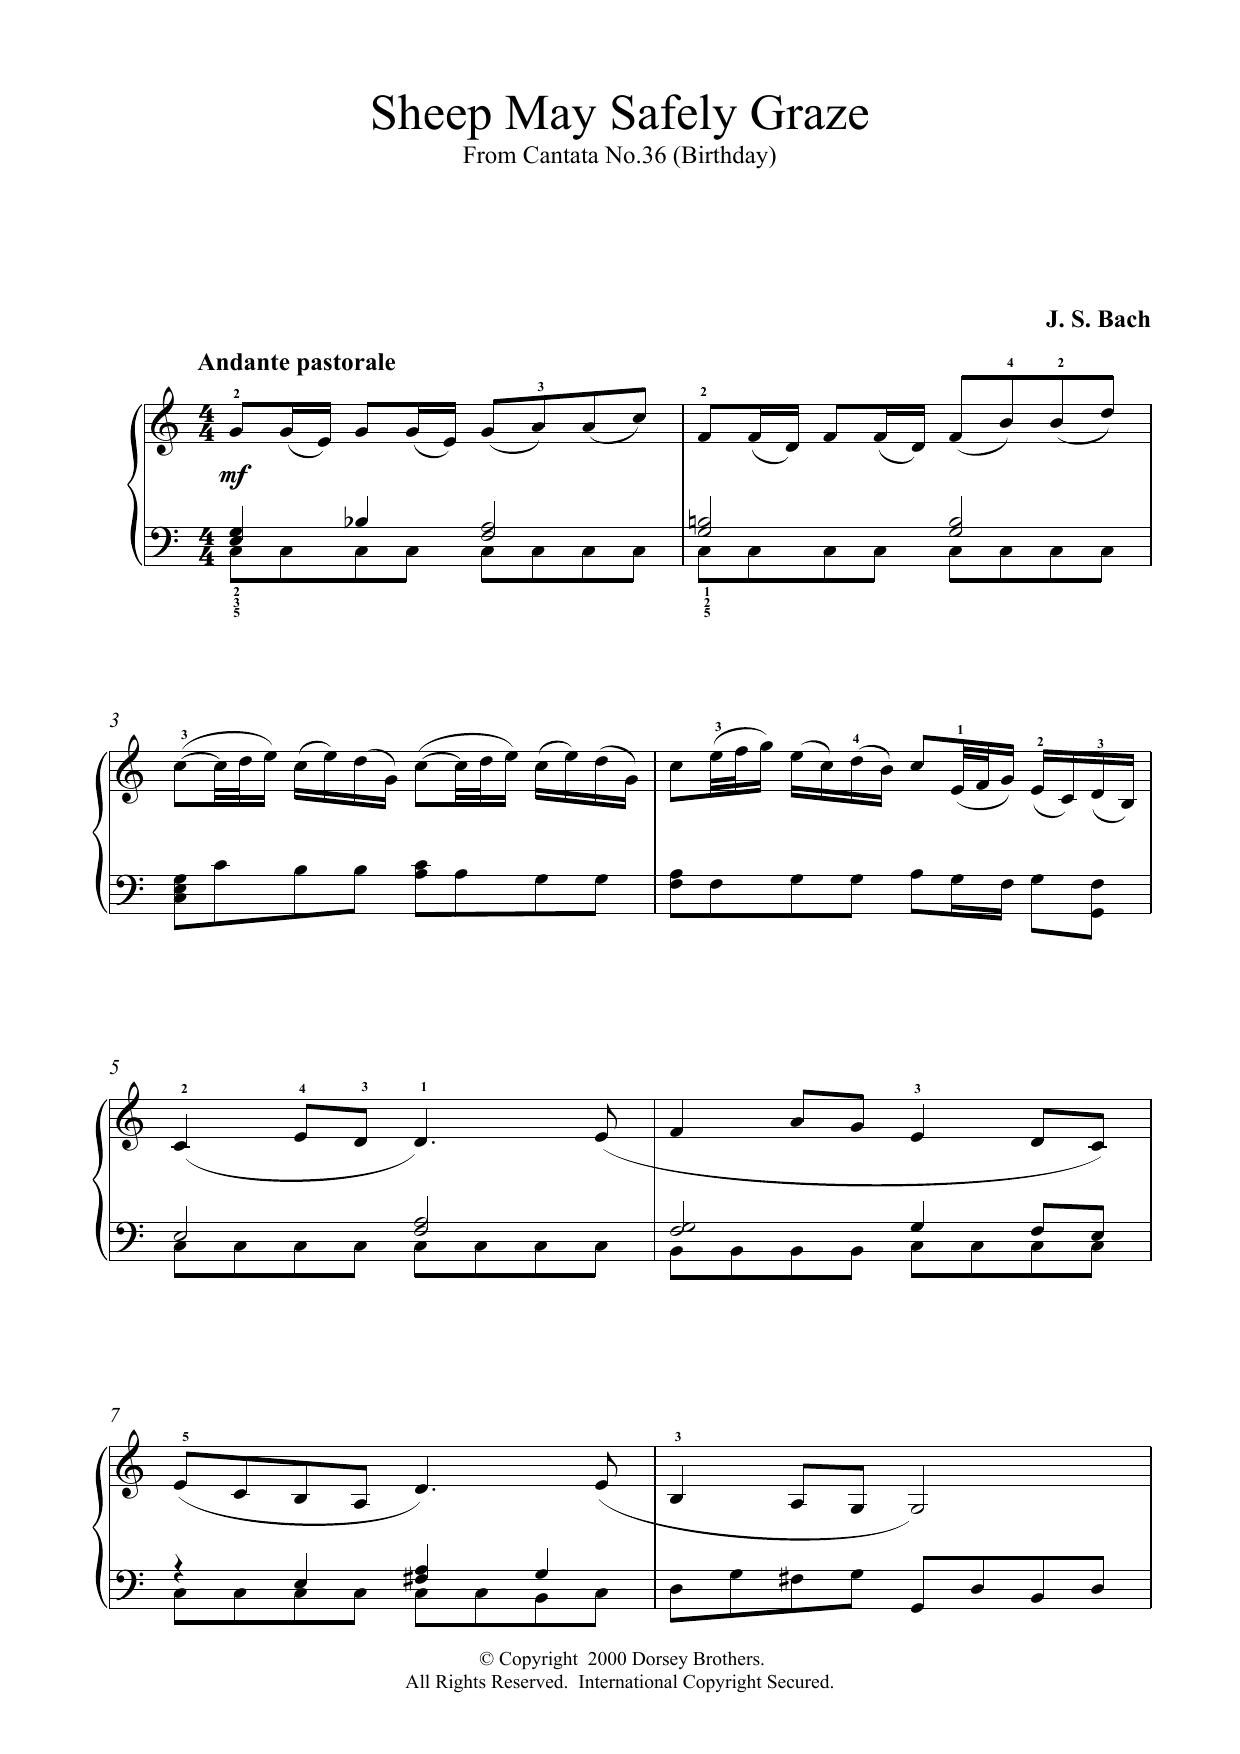 Johann Sebastian Bach Sheep May Safely Graze Sheet Music Notes & Chords for Piano - Download or Print PDF